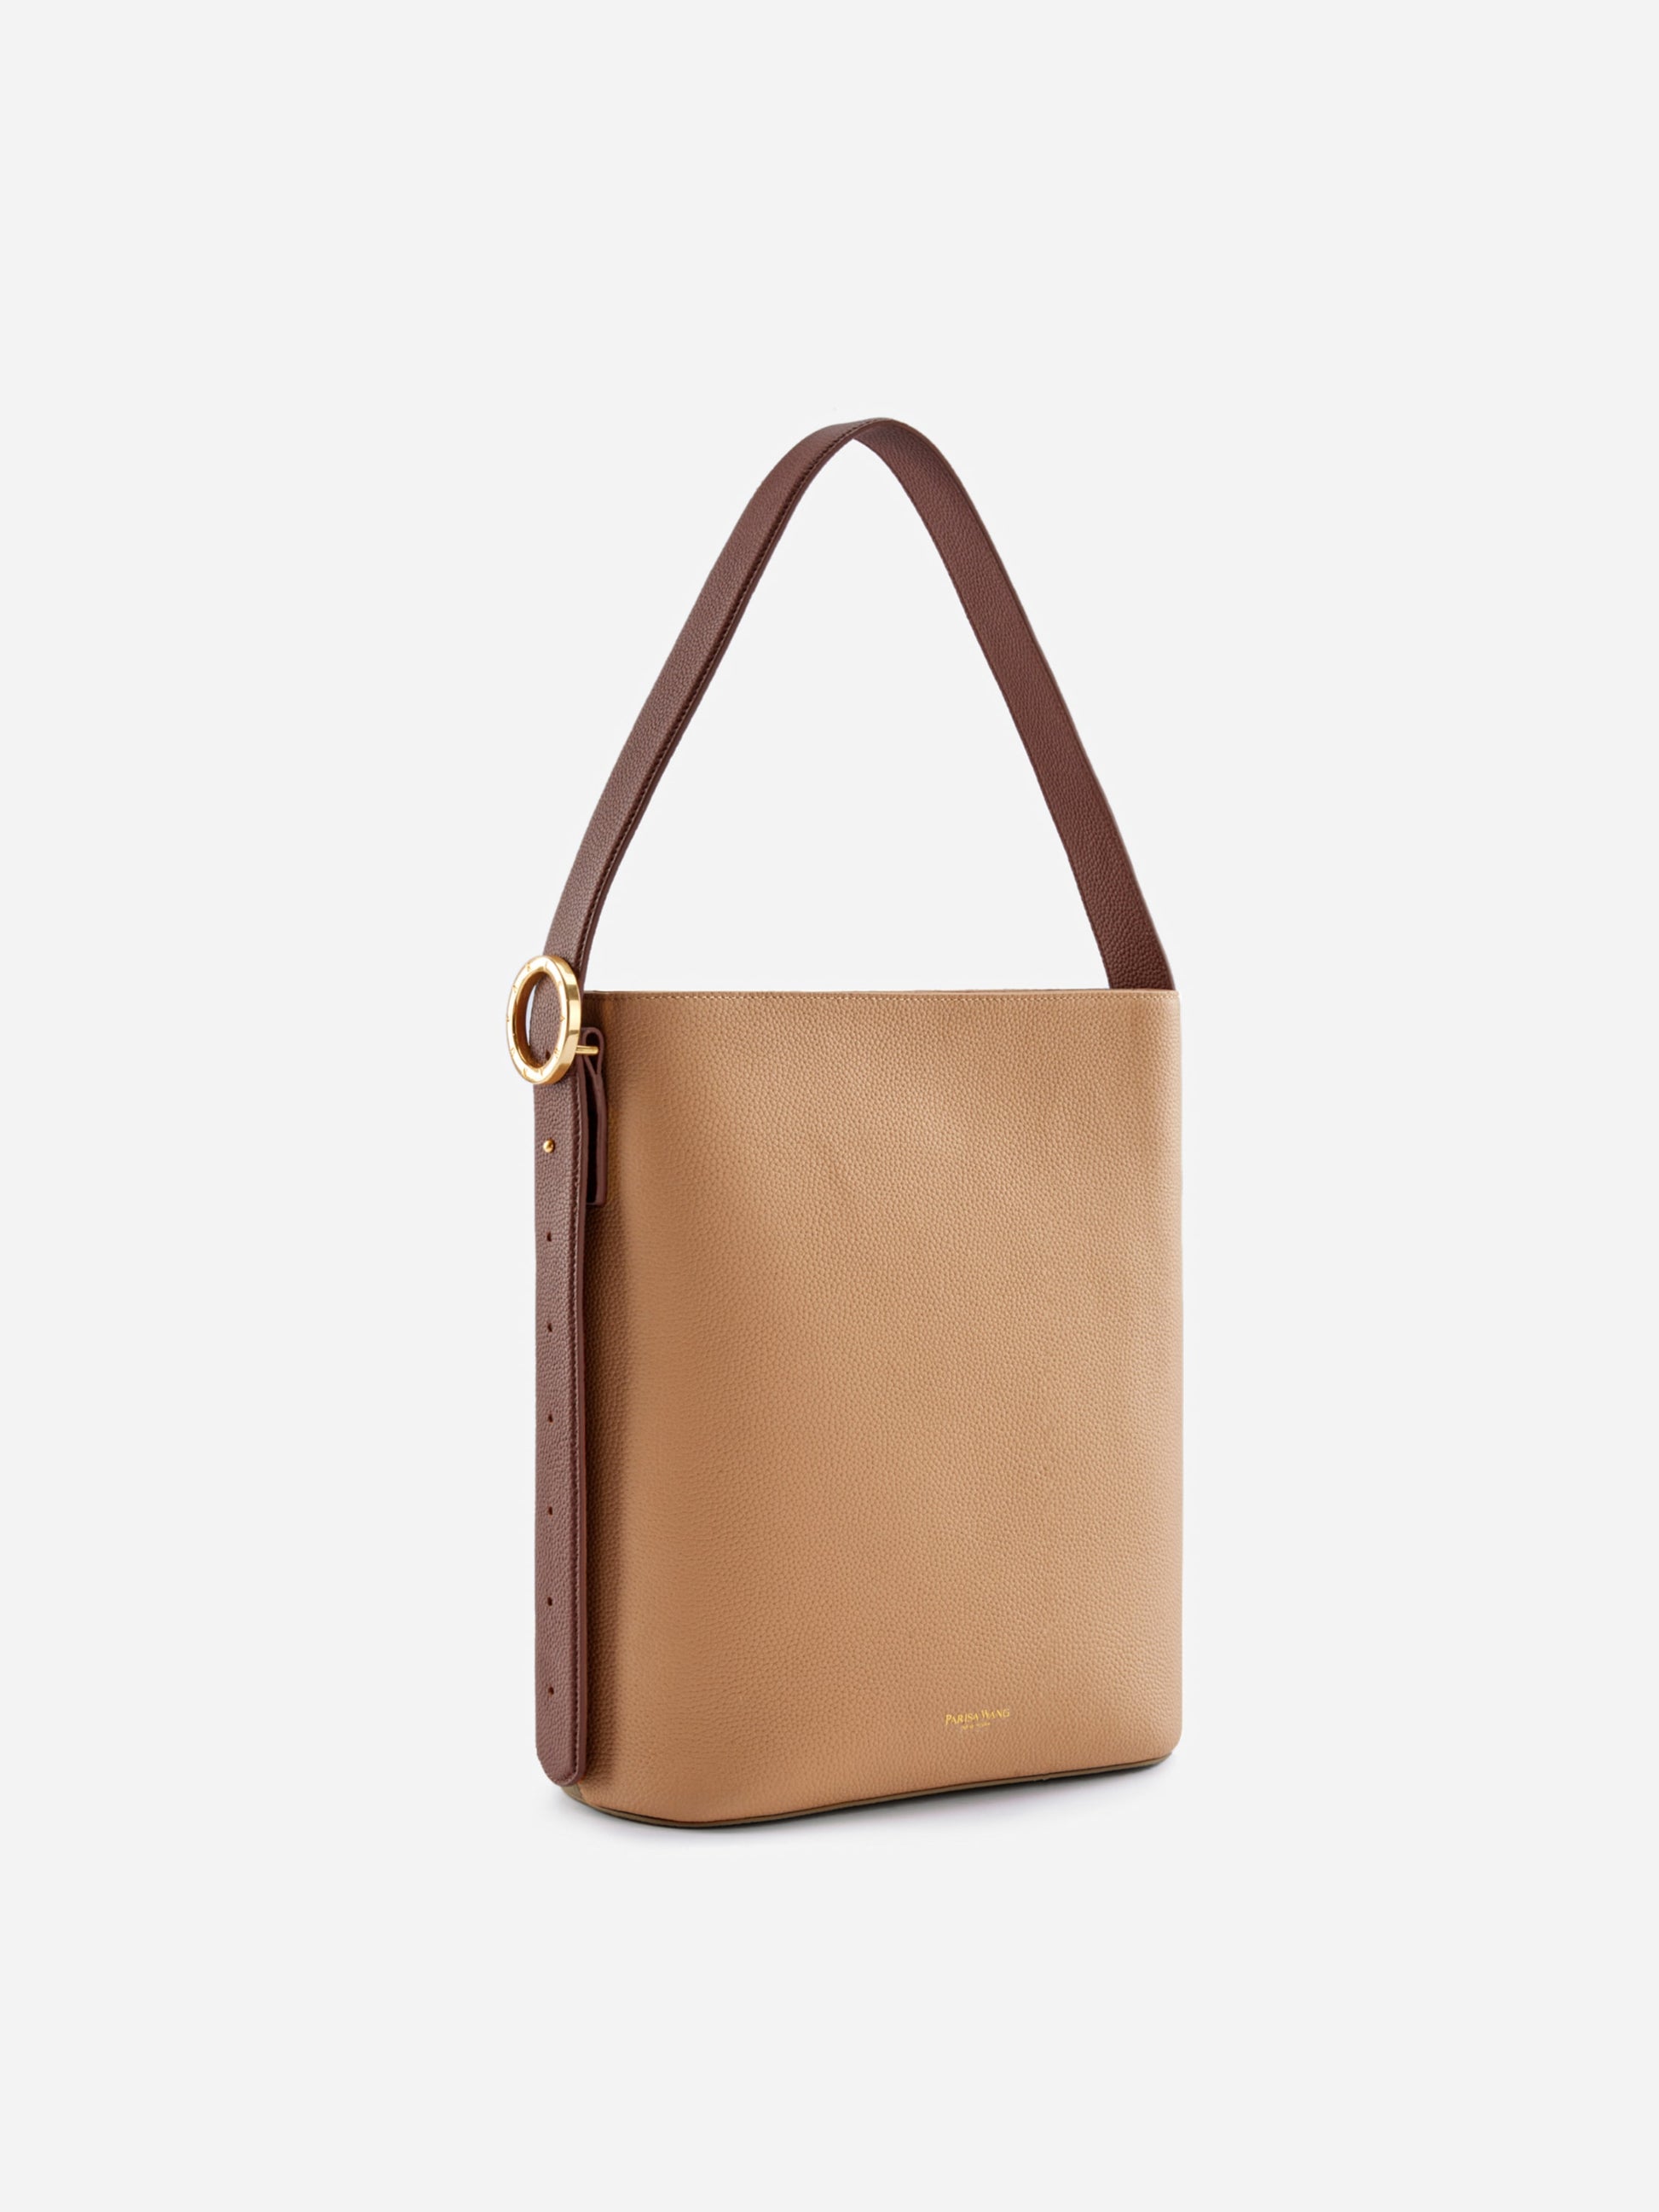 Designer Round Brand Handbags L Tote Bag Lady Handbag V - China